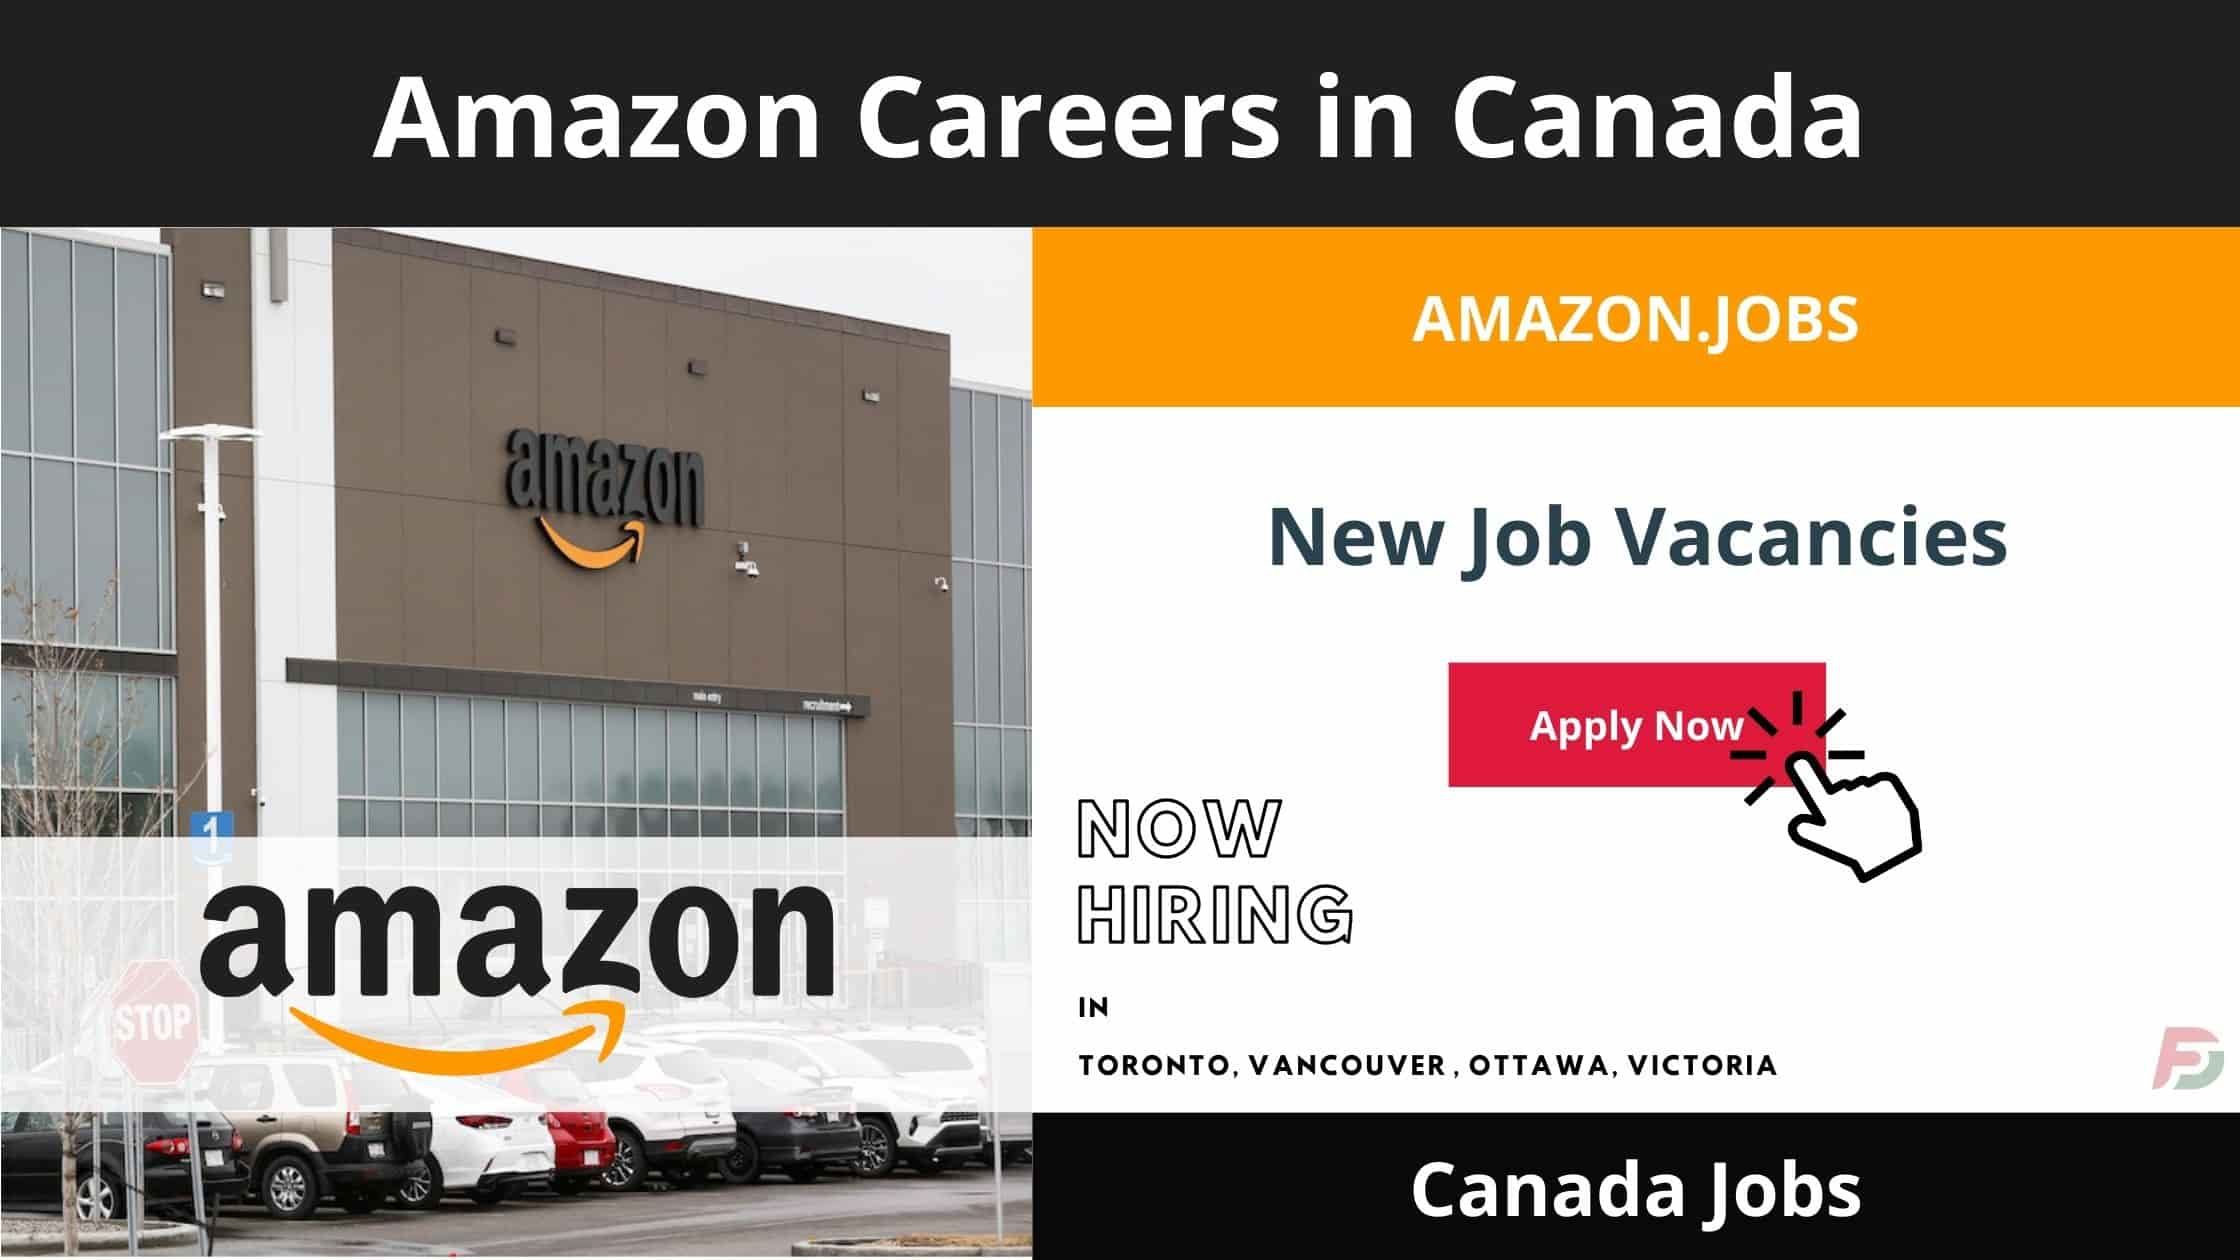 Amazon Careers in Canada